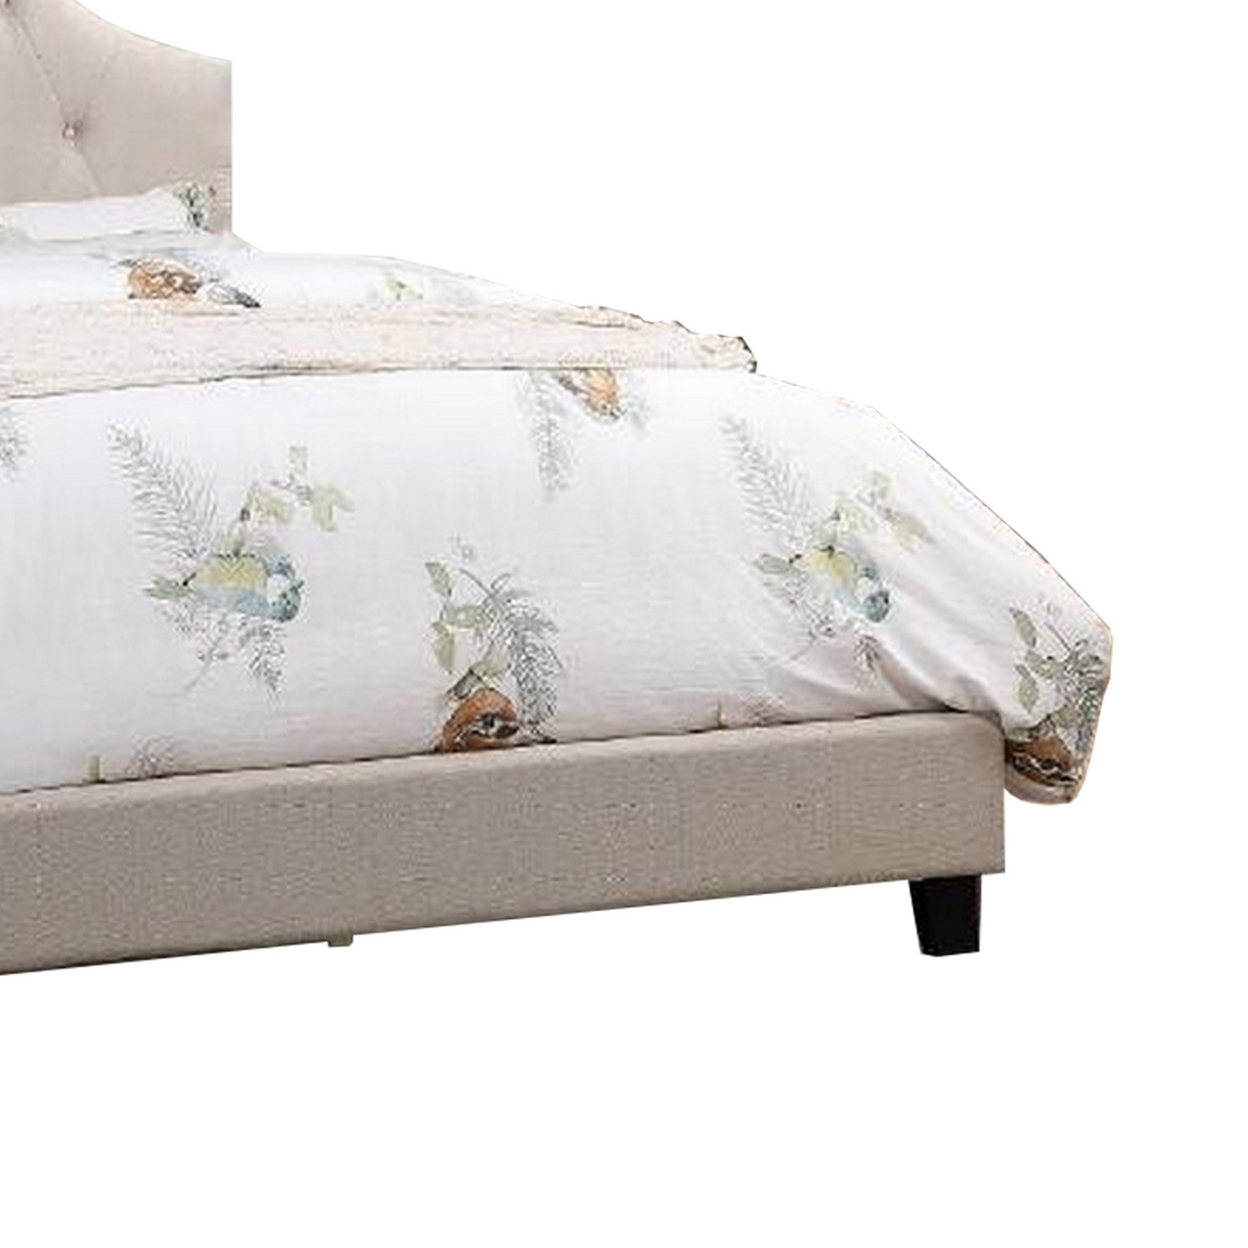 Eni Upholstered Full Size Bed, Tufted Adjustable Headboard, Taupe Fabric- Saltoro Sherpi